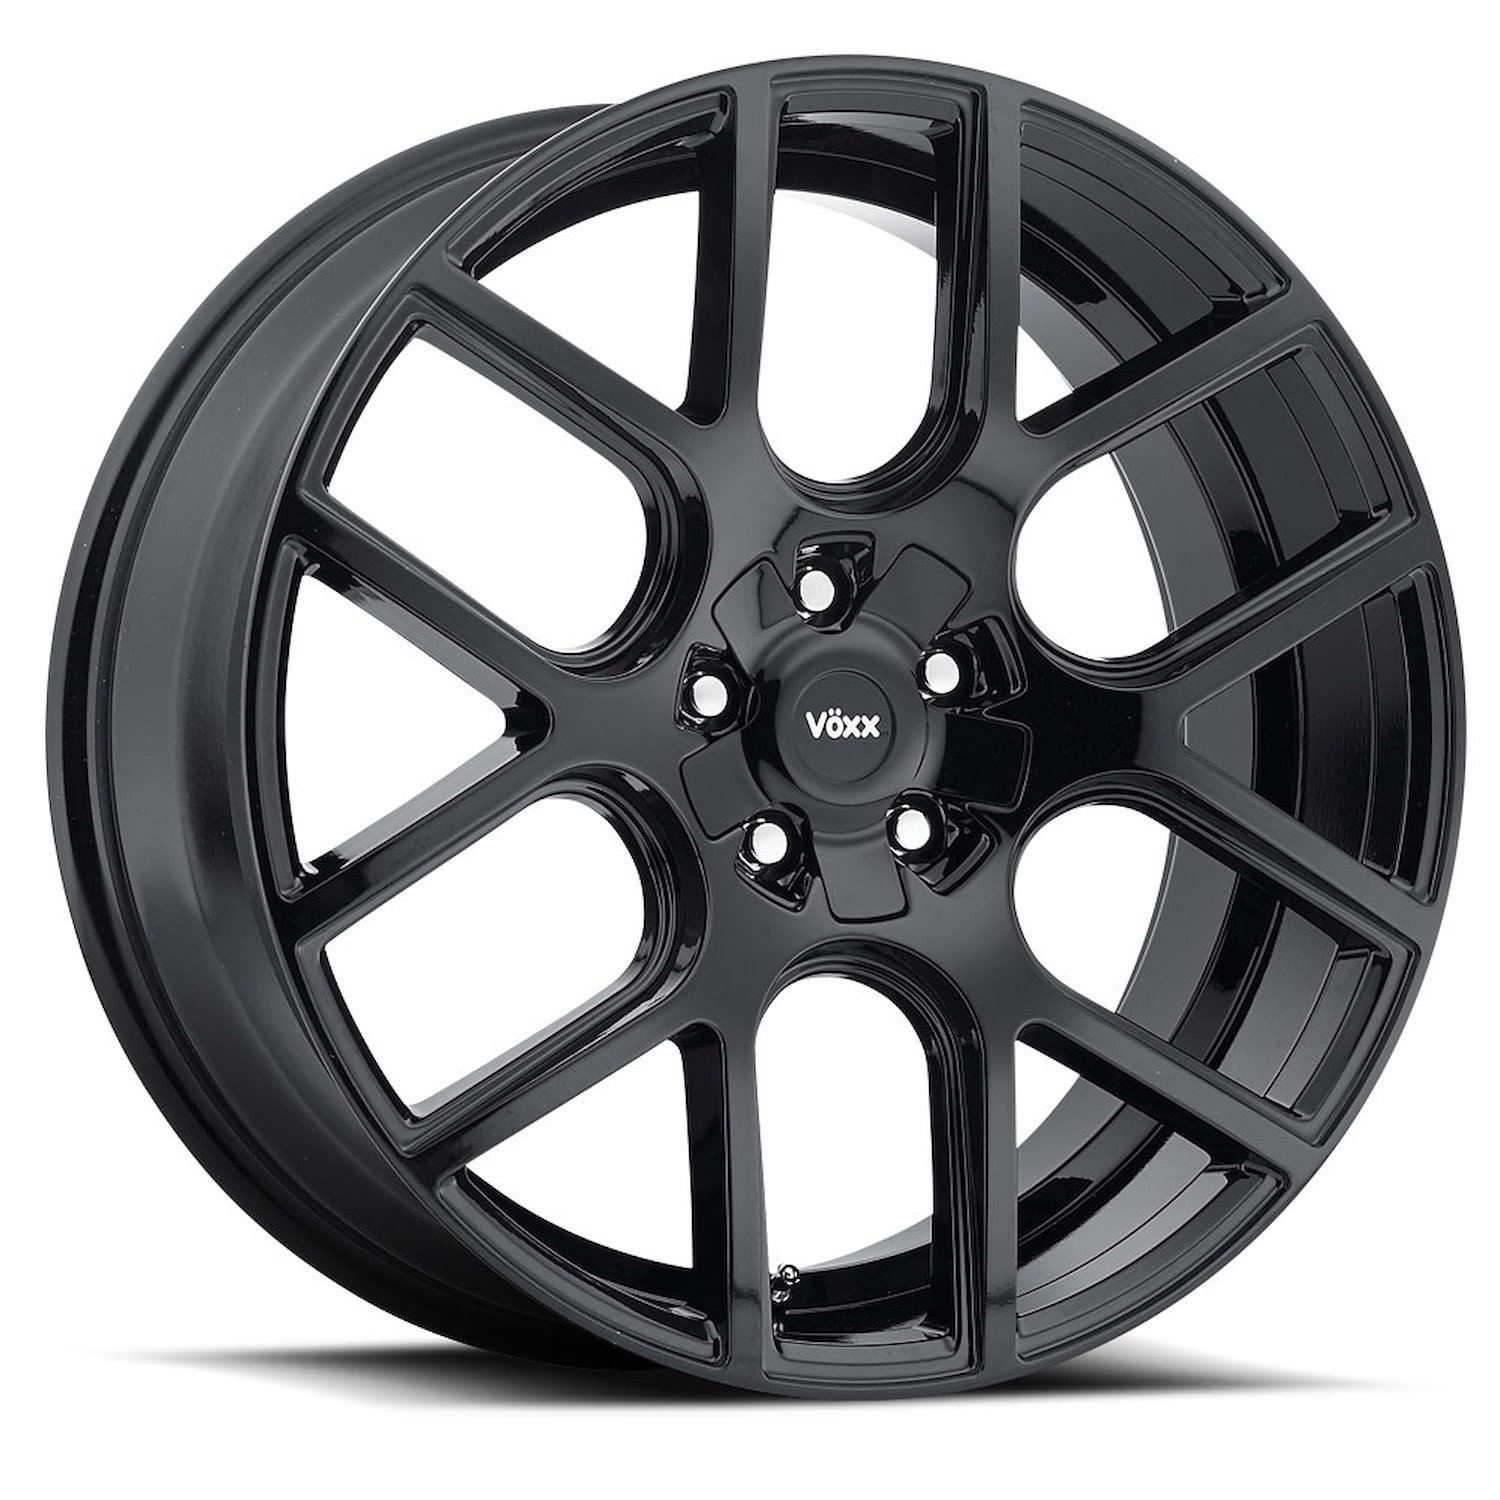 LAG 285-5008-40 GB Lago Wheel [Size: 20" x 8.50"] Finish: Gloss Black